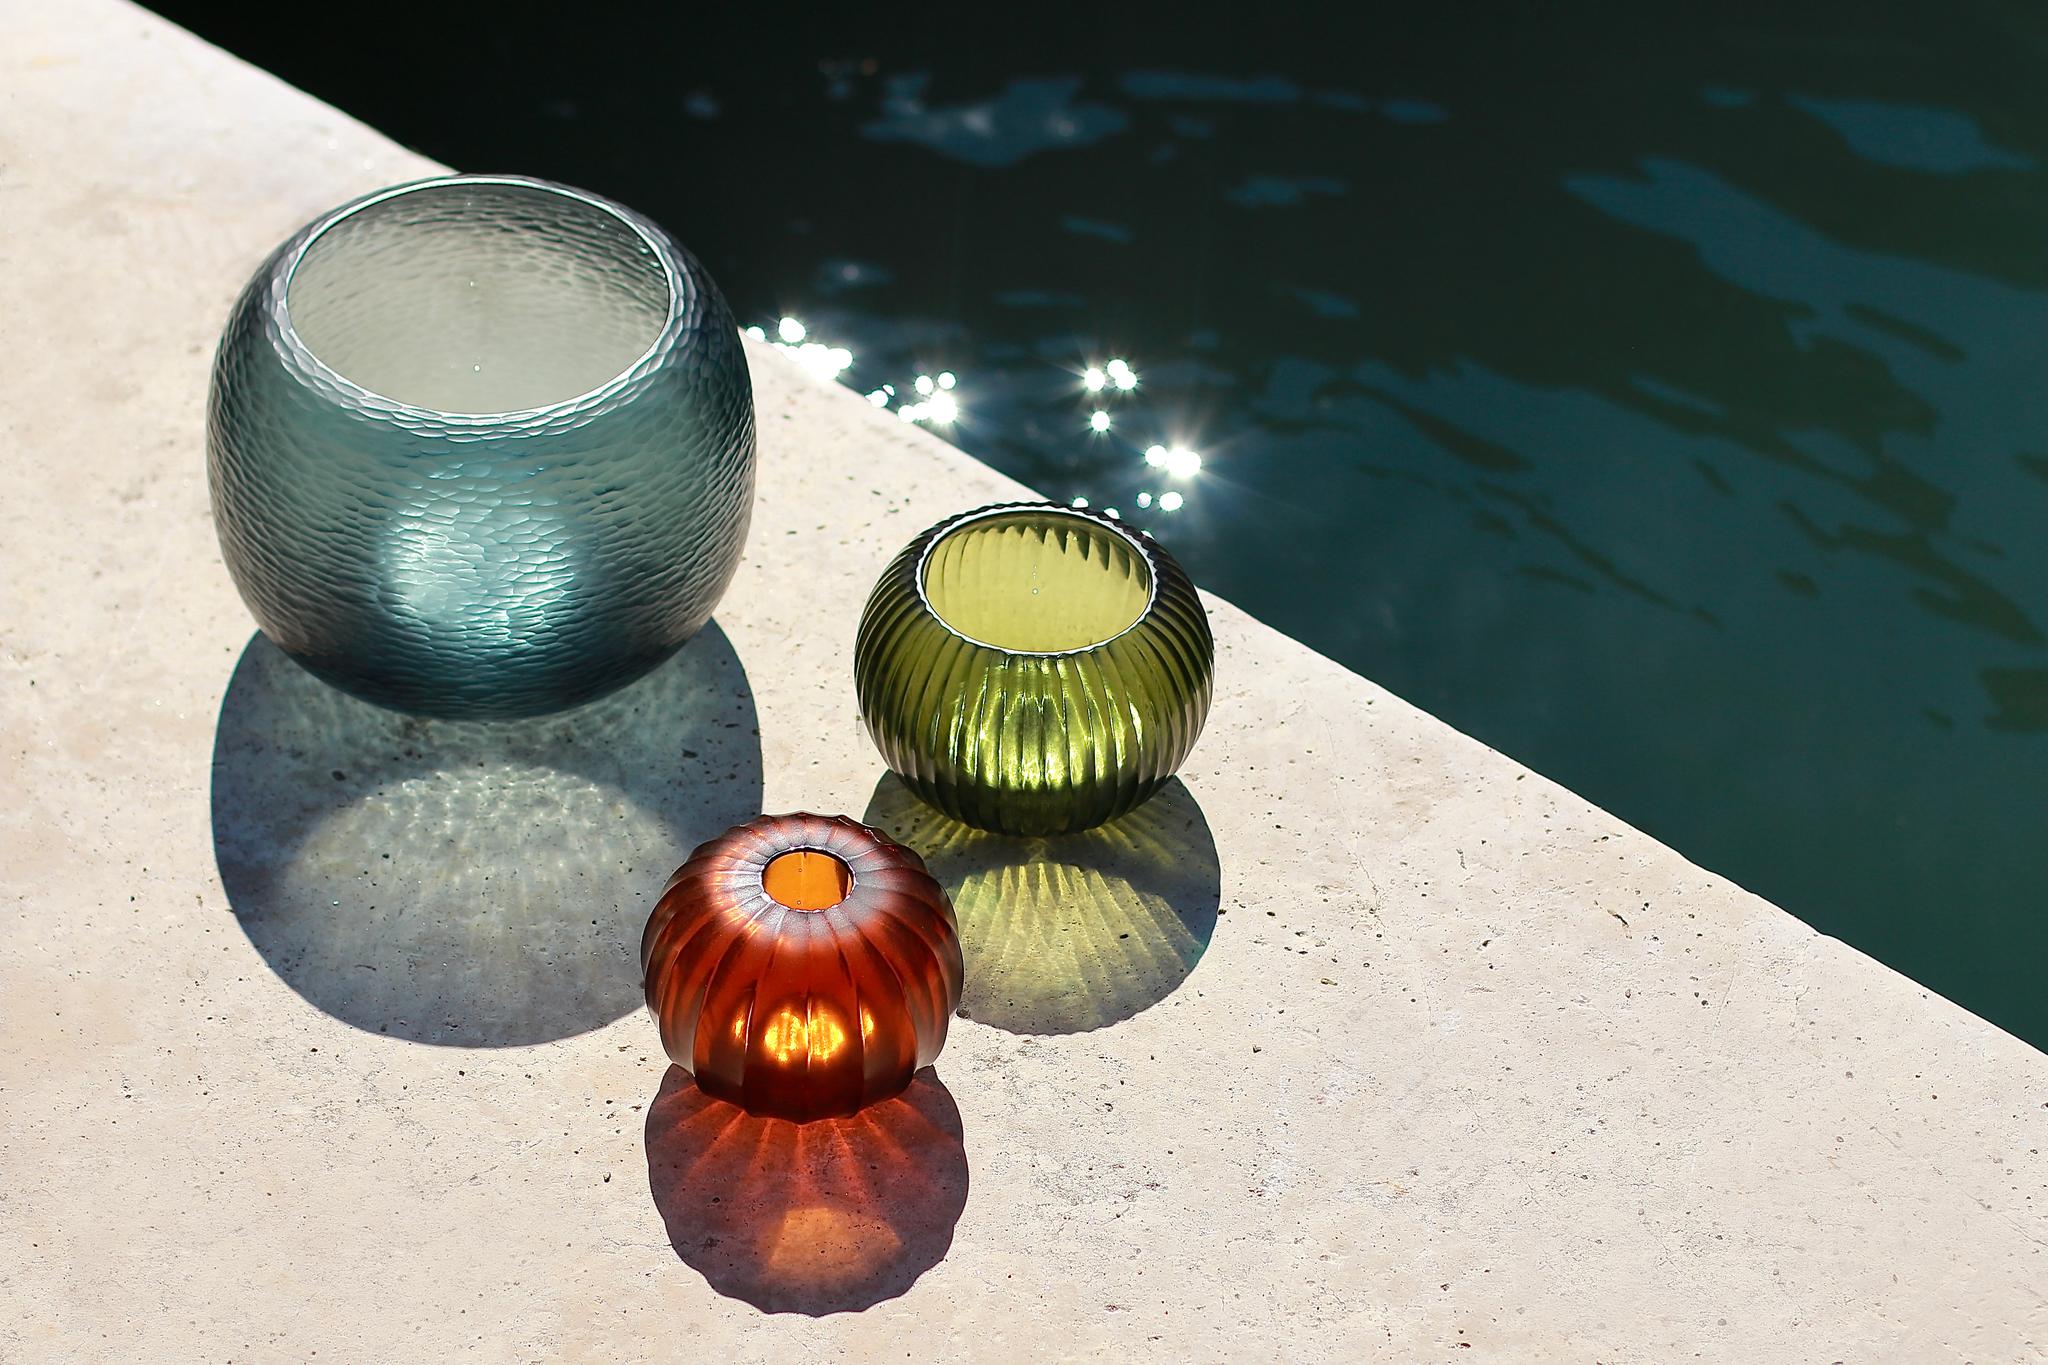 Micheluzzi Glass: Innovative Visions of Glassmaking